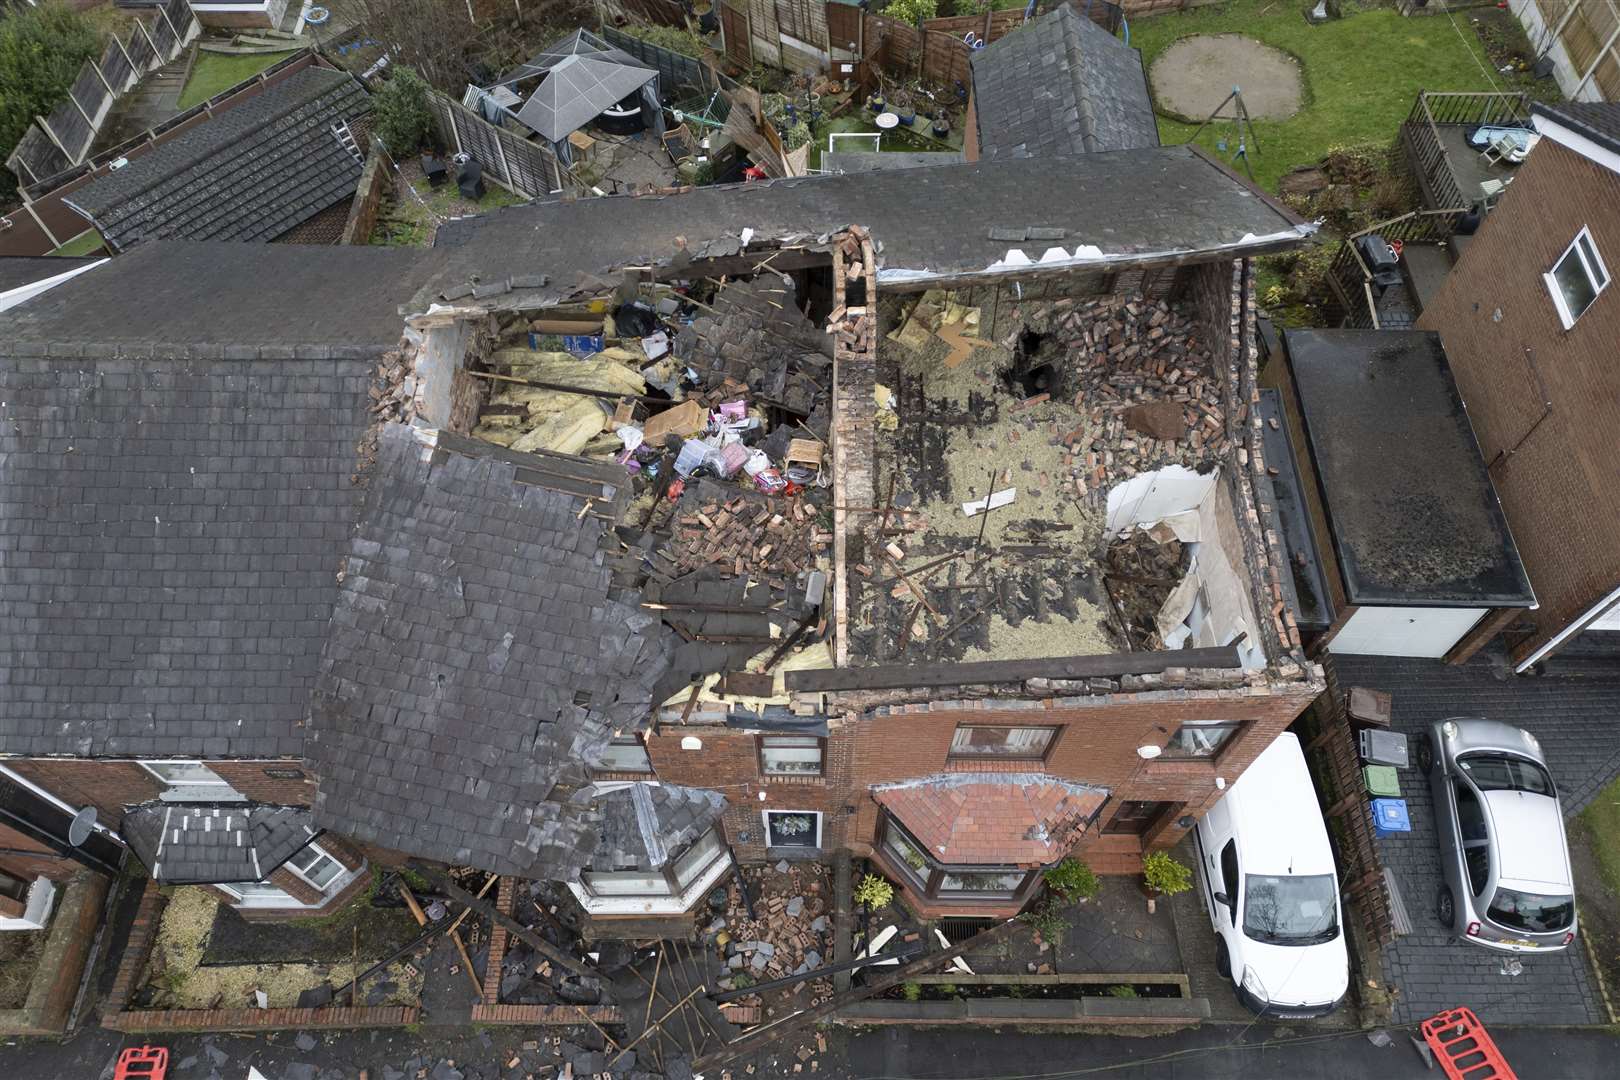 Stalybridge residents told of houses in states of ‘absolute disaster’ (AP Photo/Jon Super)